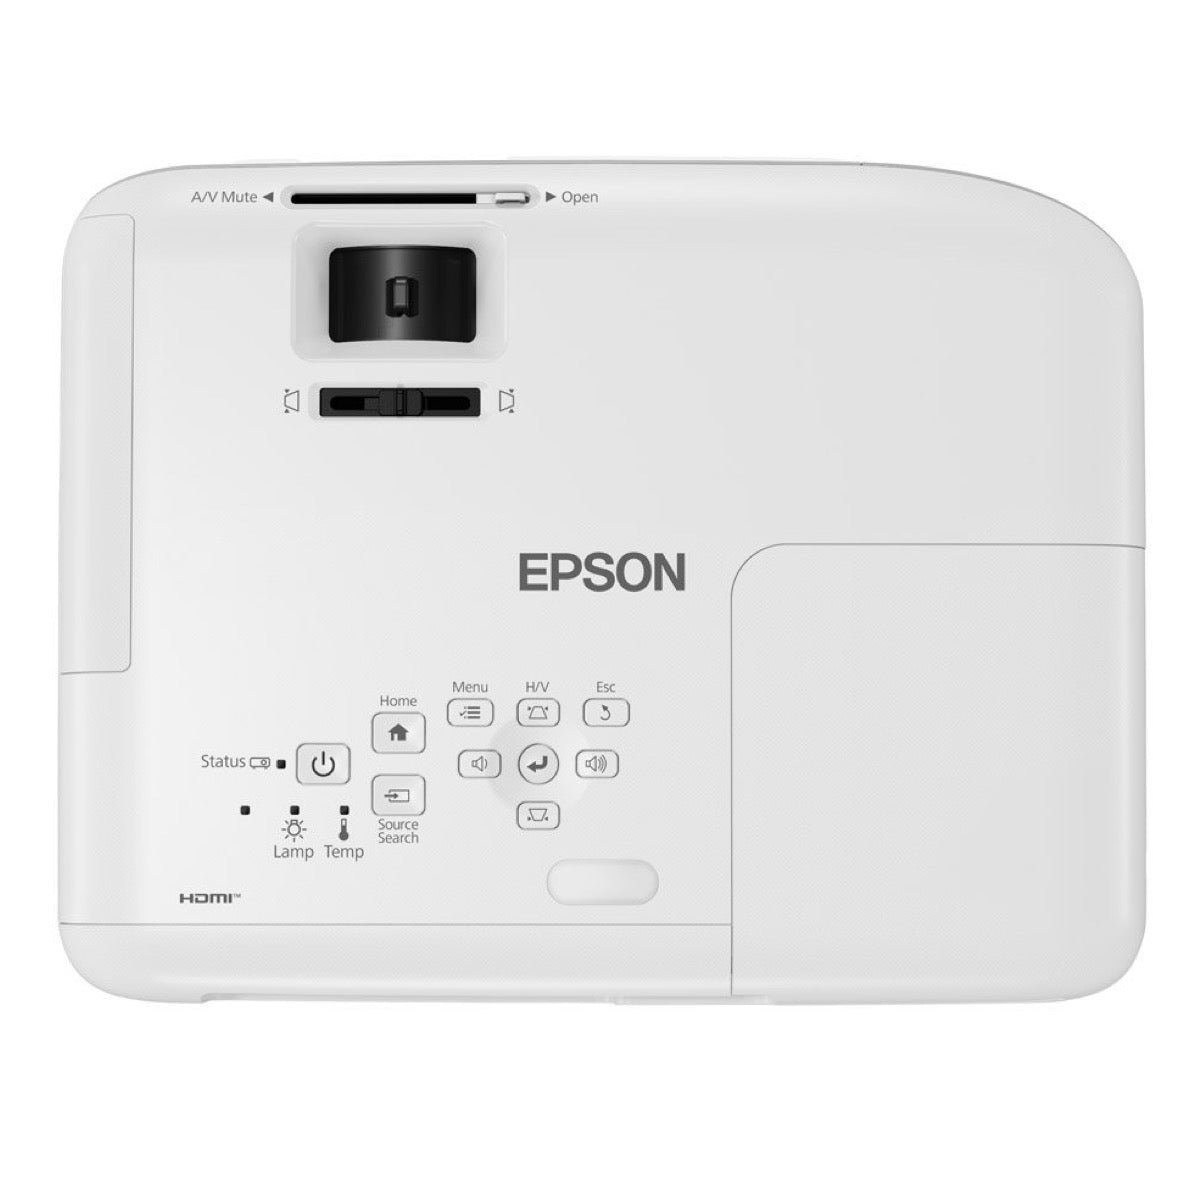 Epson EH-TW750 - Full HD 1080p Home Theatre Projector - AVStore